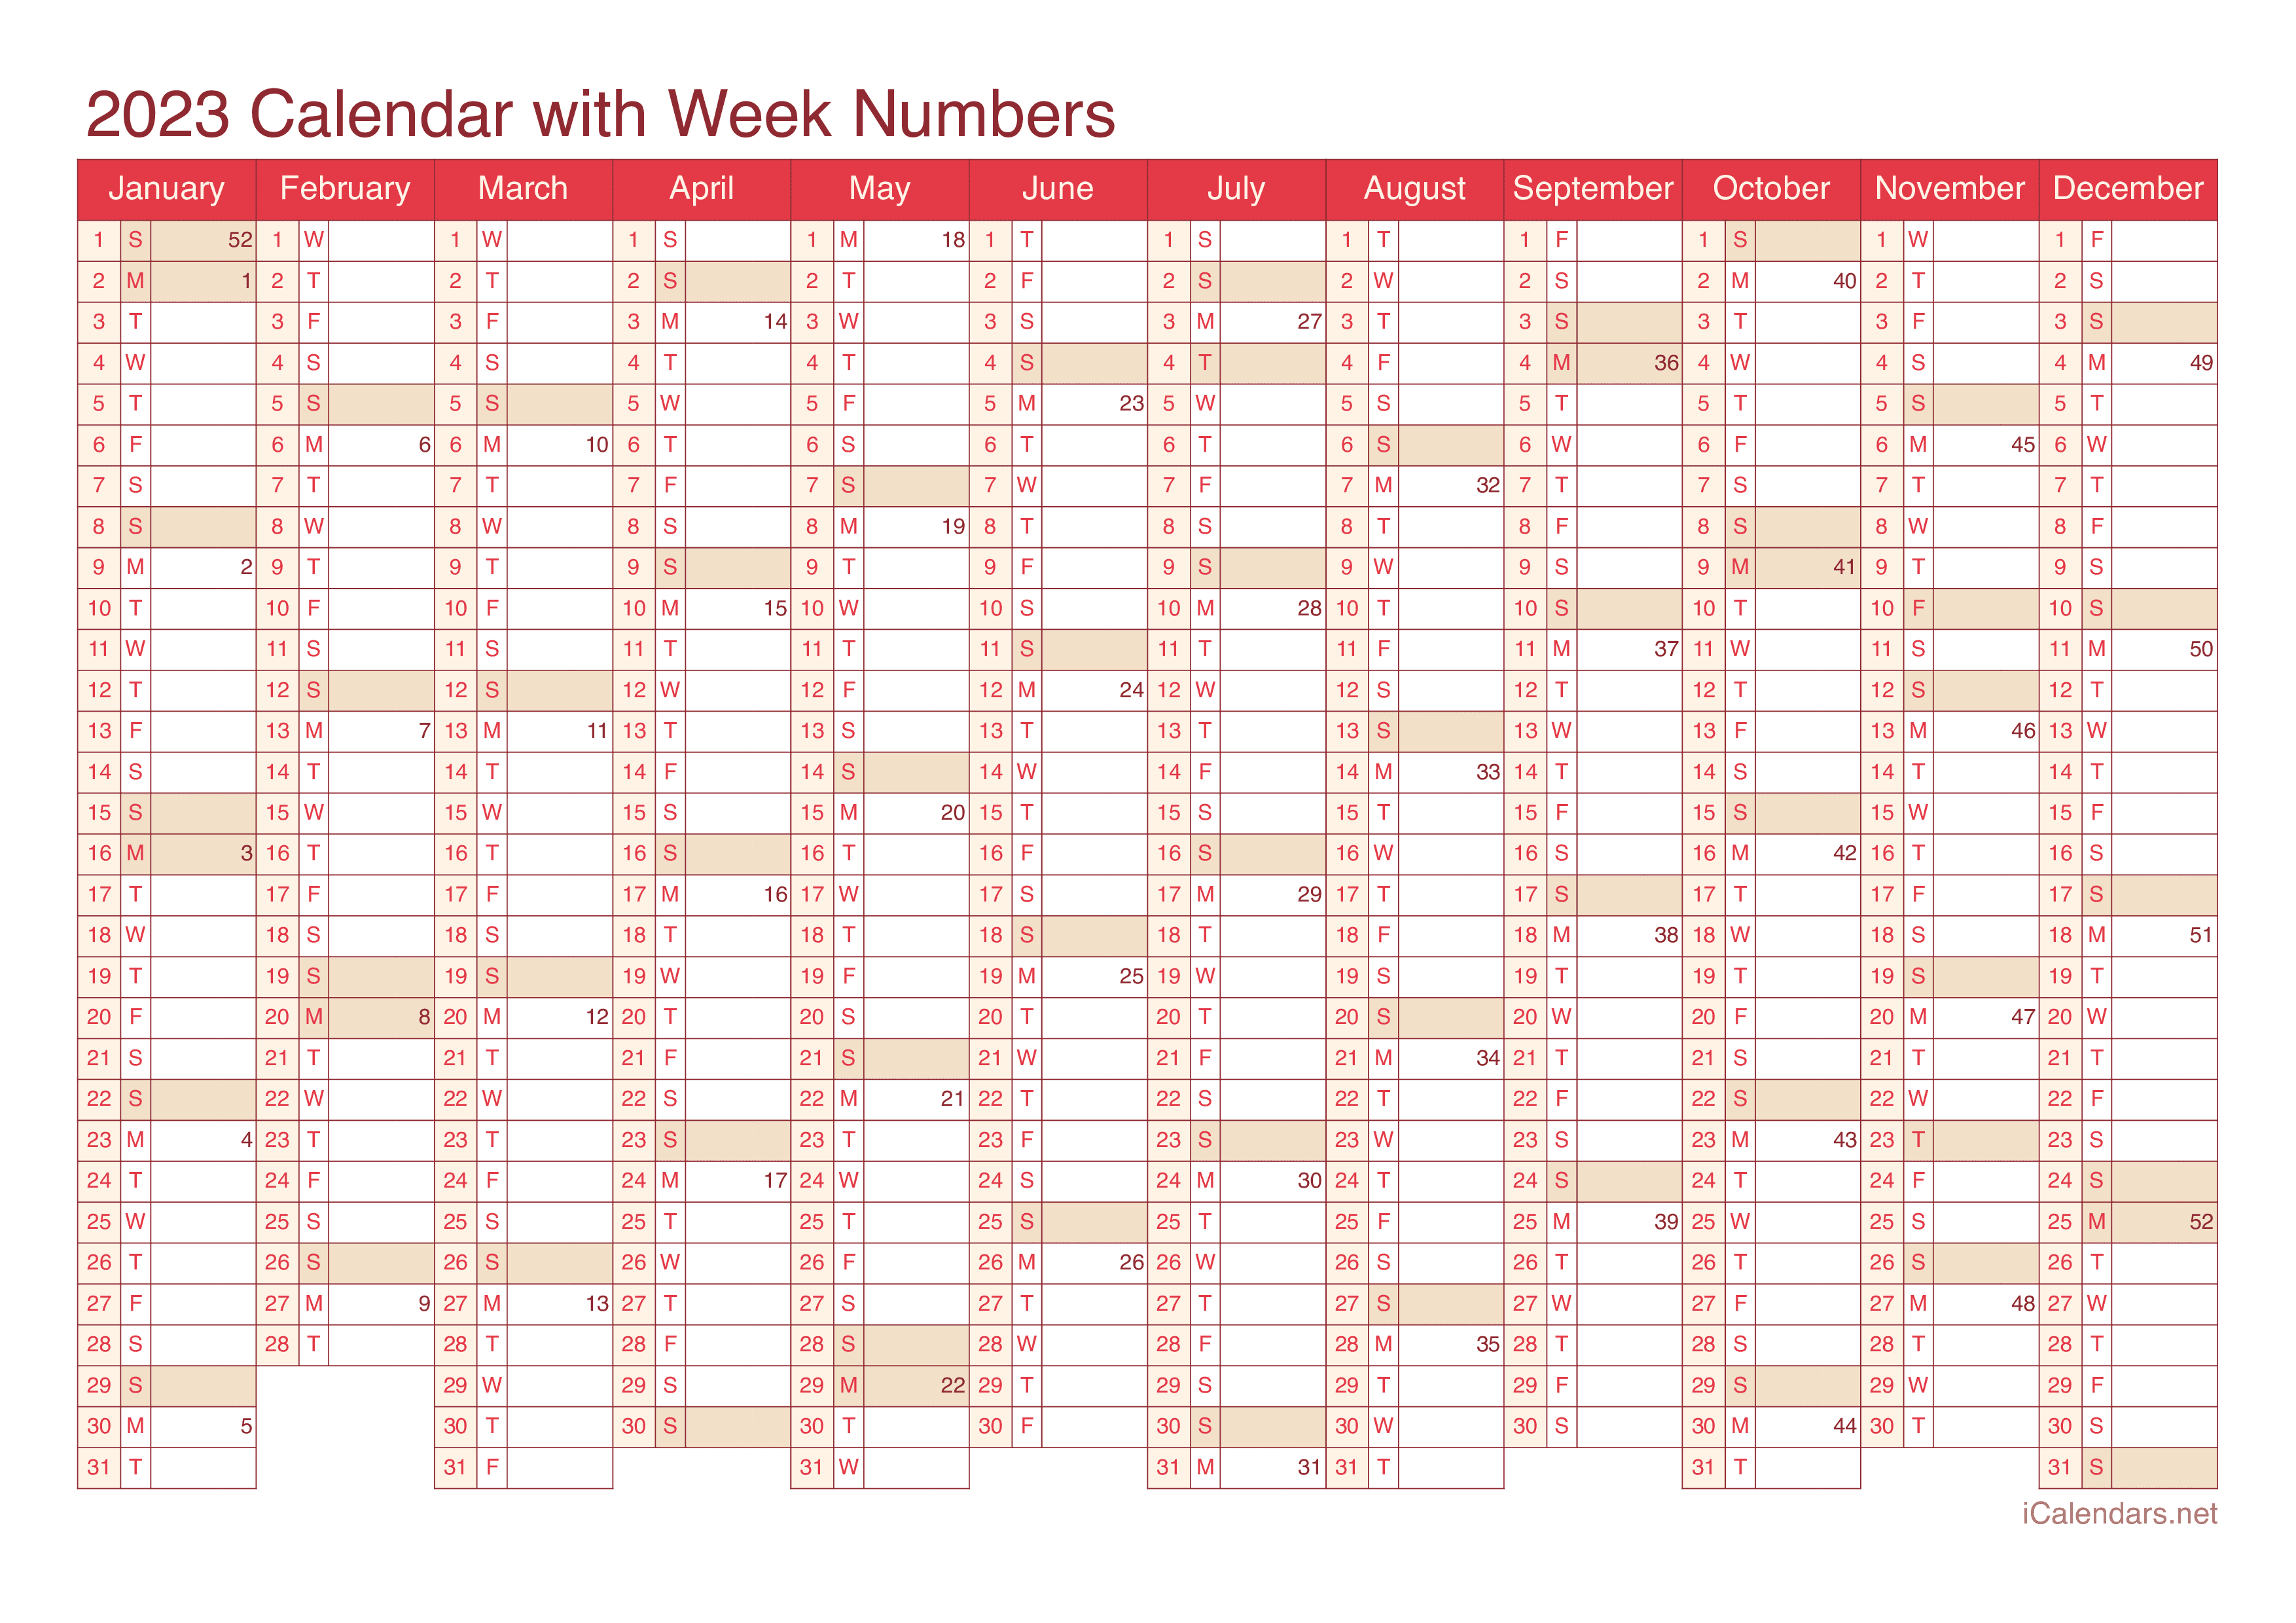 2023 Calendar with week numbers - Cherry